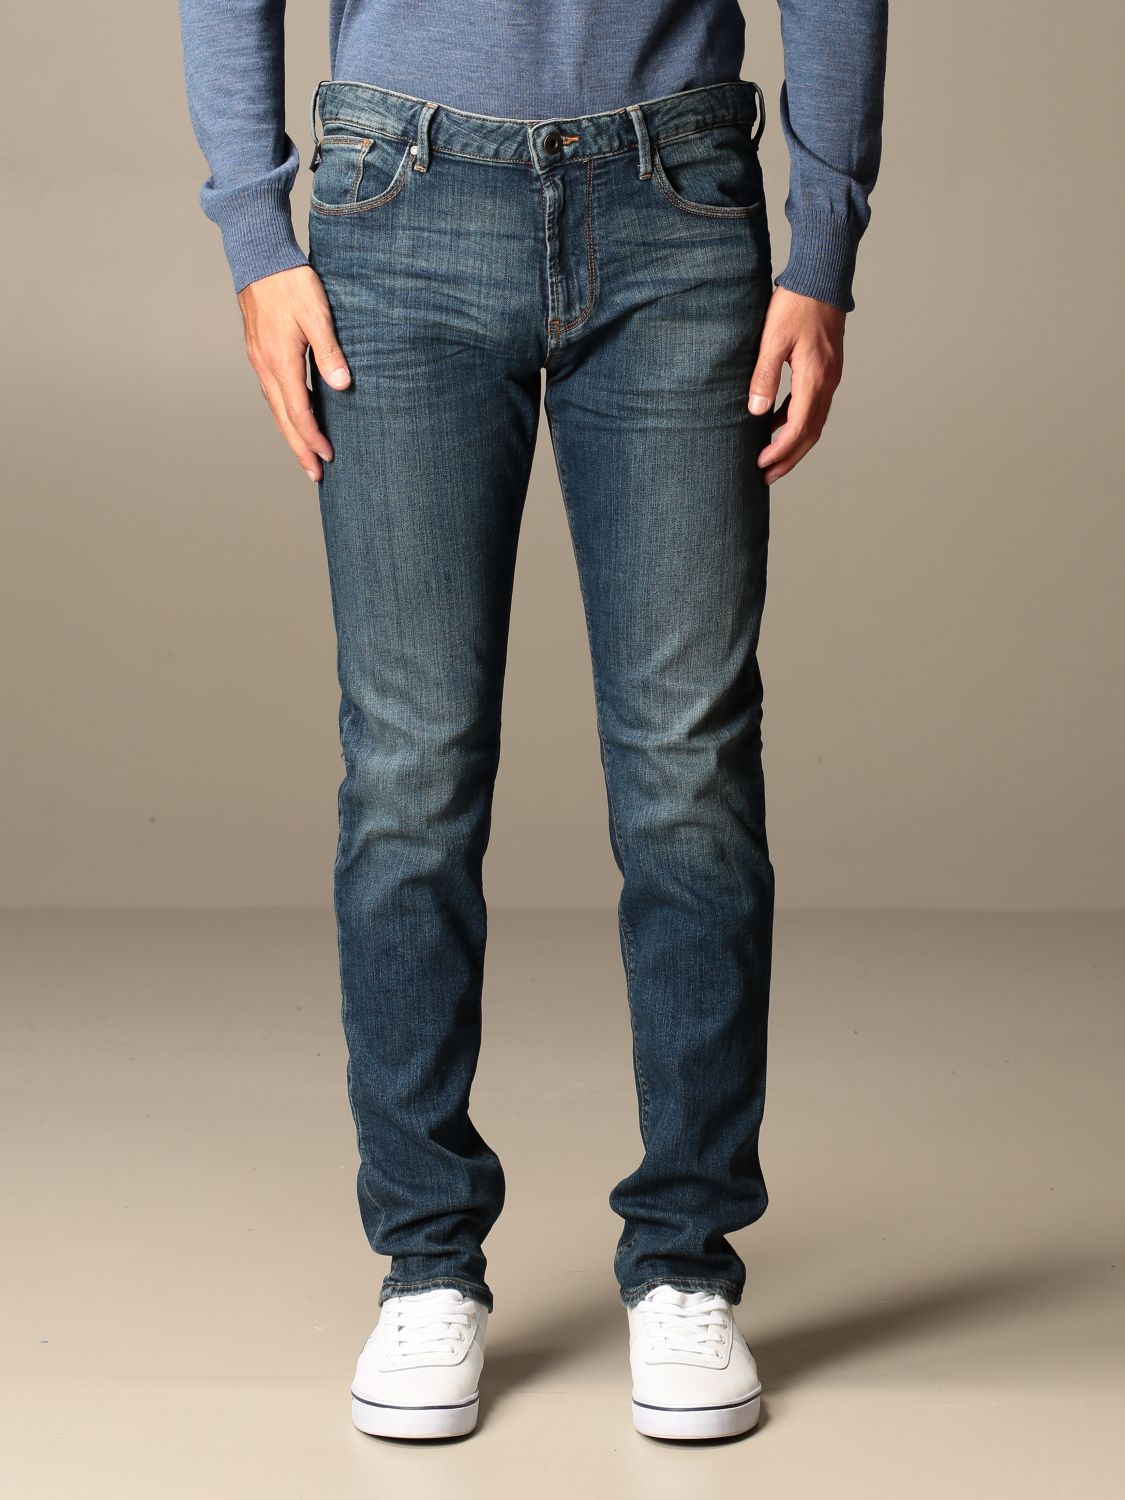 Arriba 68+ imagen armani skinny jeans mens - Abzlocal.mx